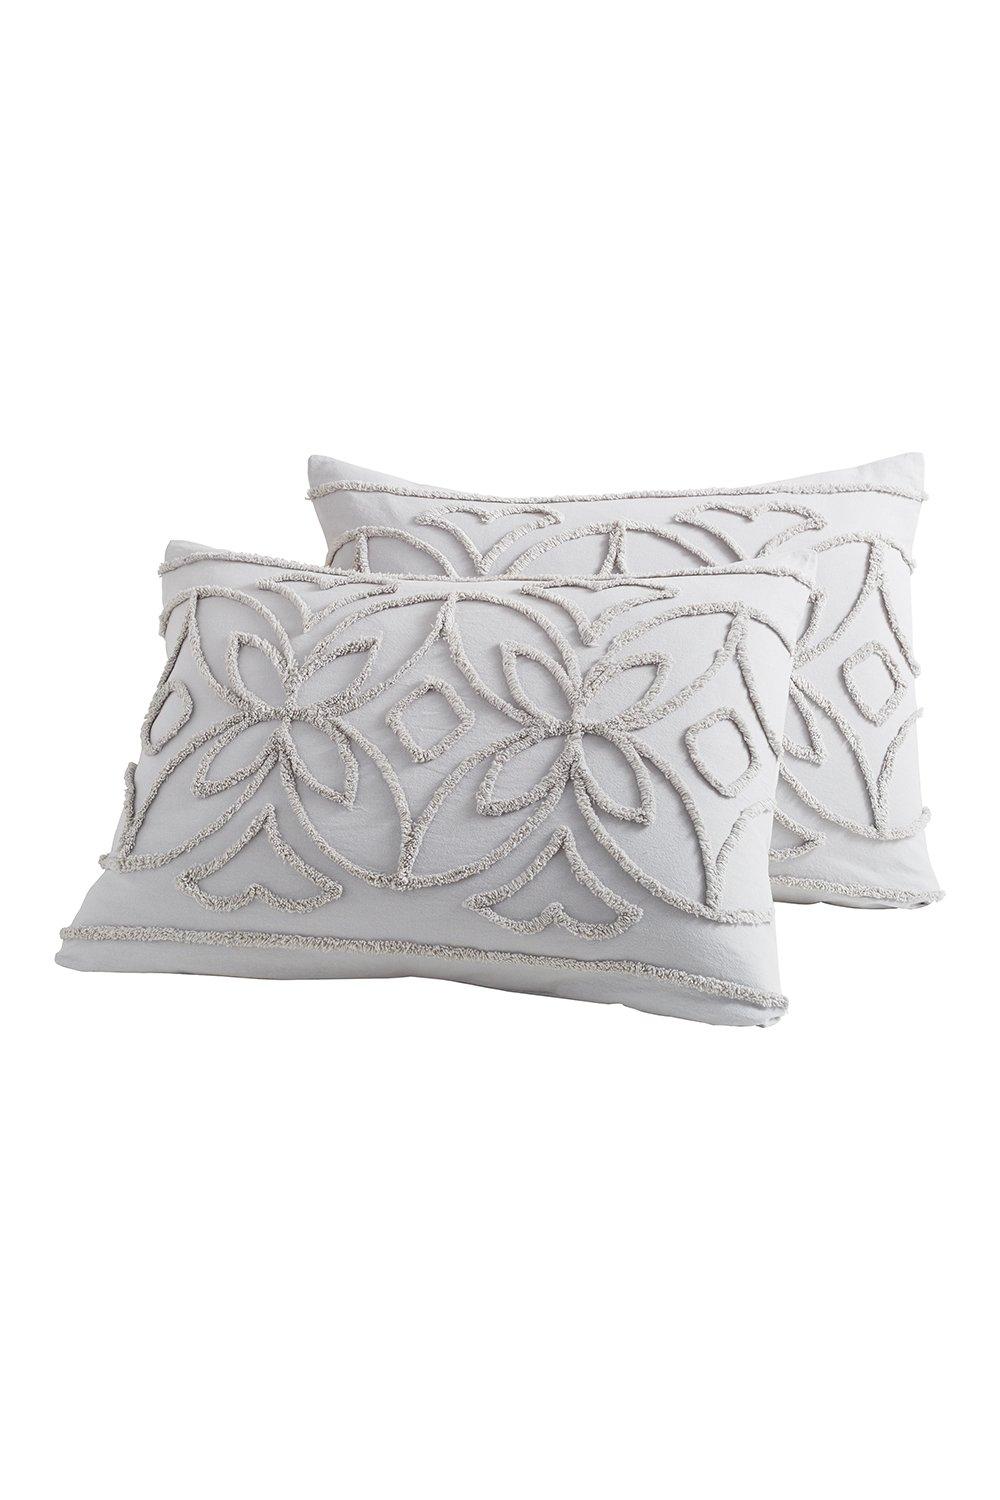 'Chenille Border Cotton' Standard Pillowcase